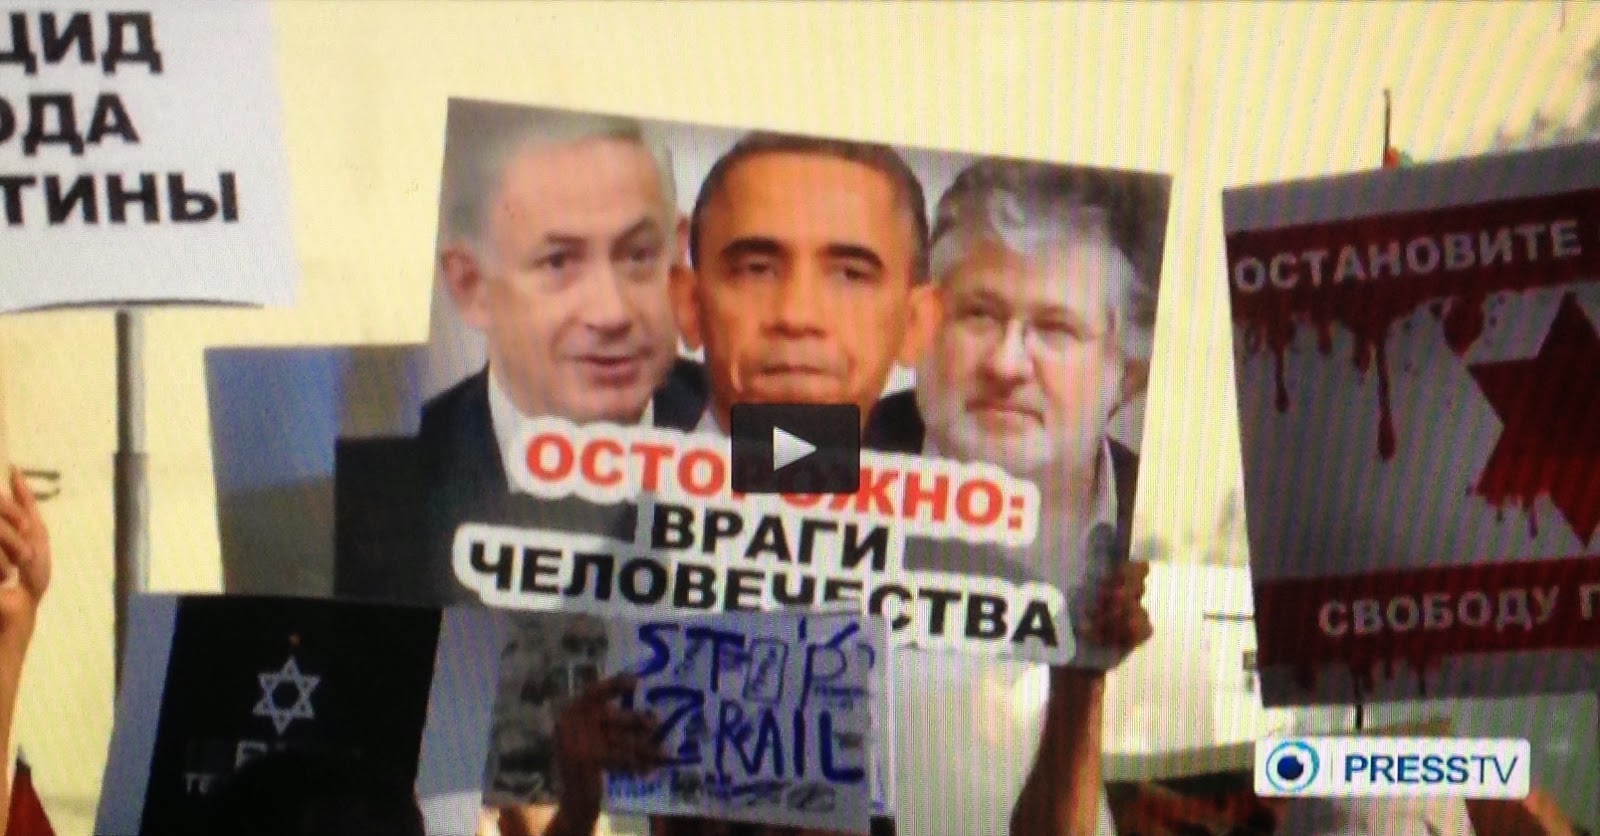 http://www.presstv.com/detail/2014/08/07/374347/russians-hold-antiisrael-protests/